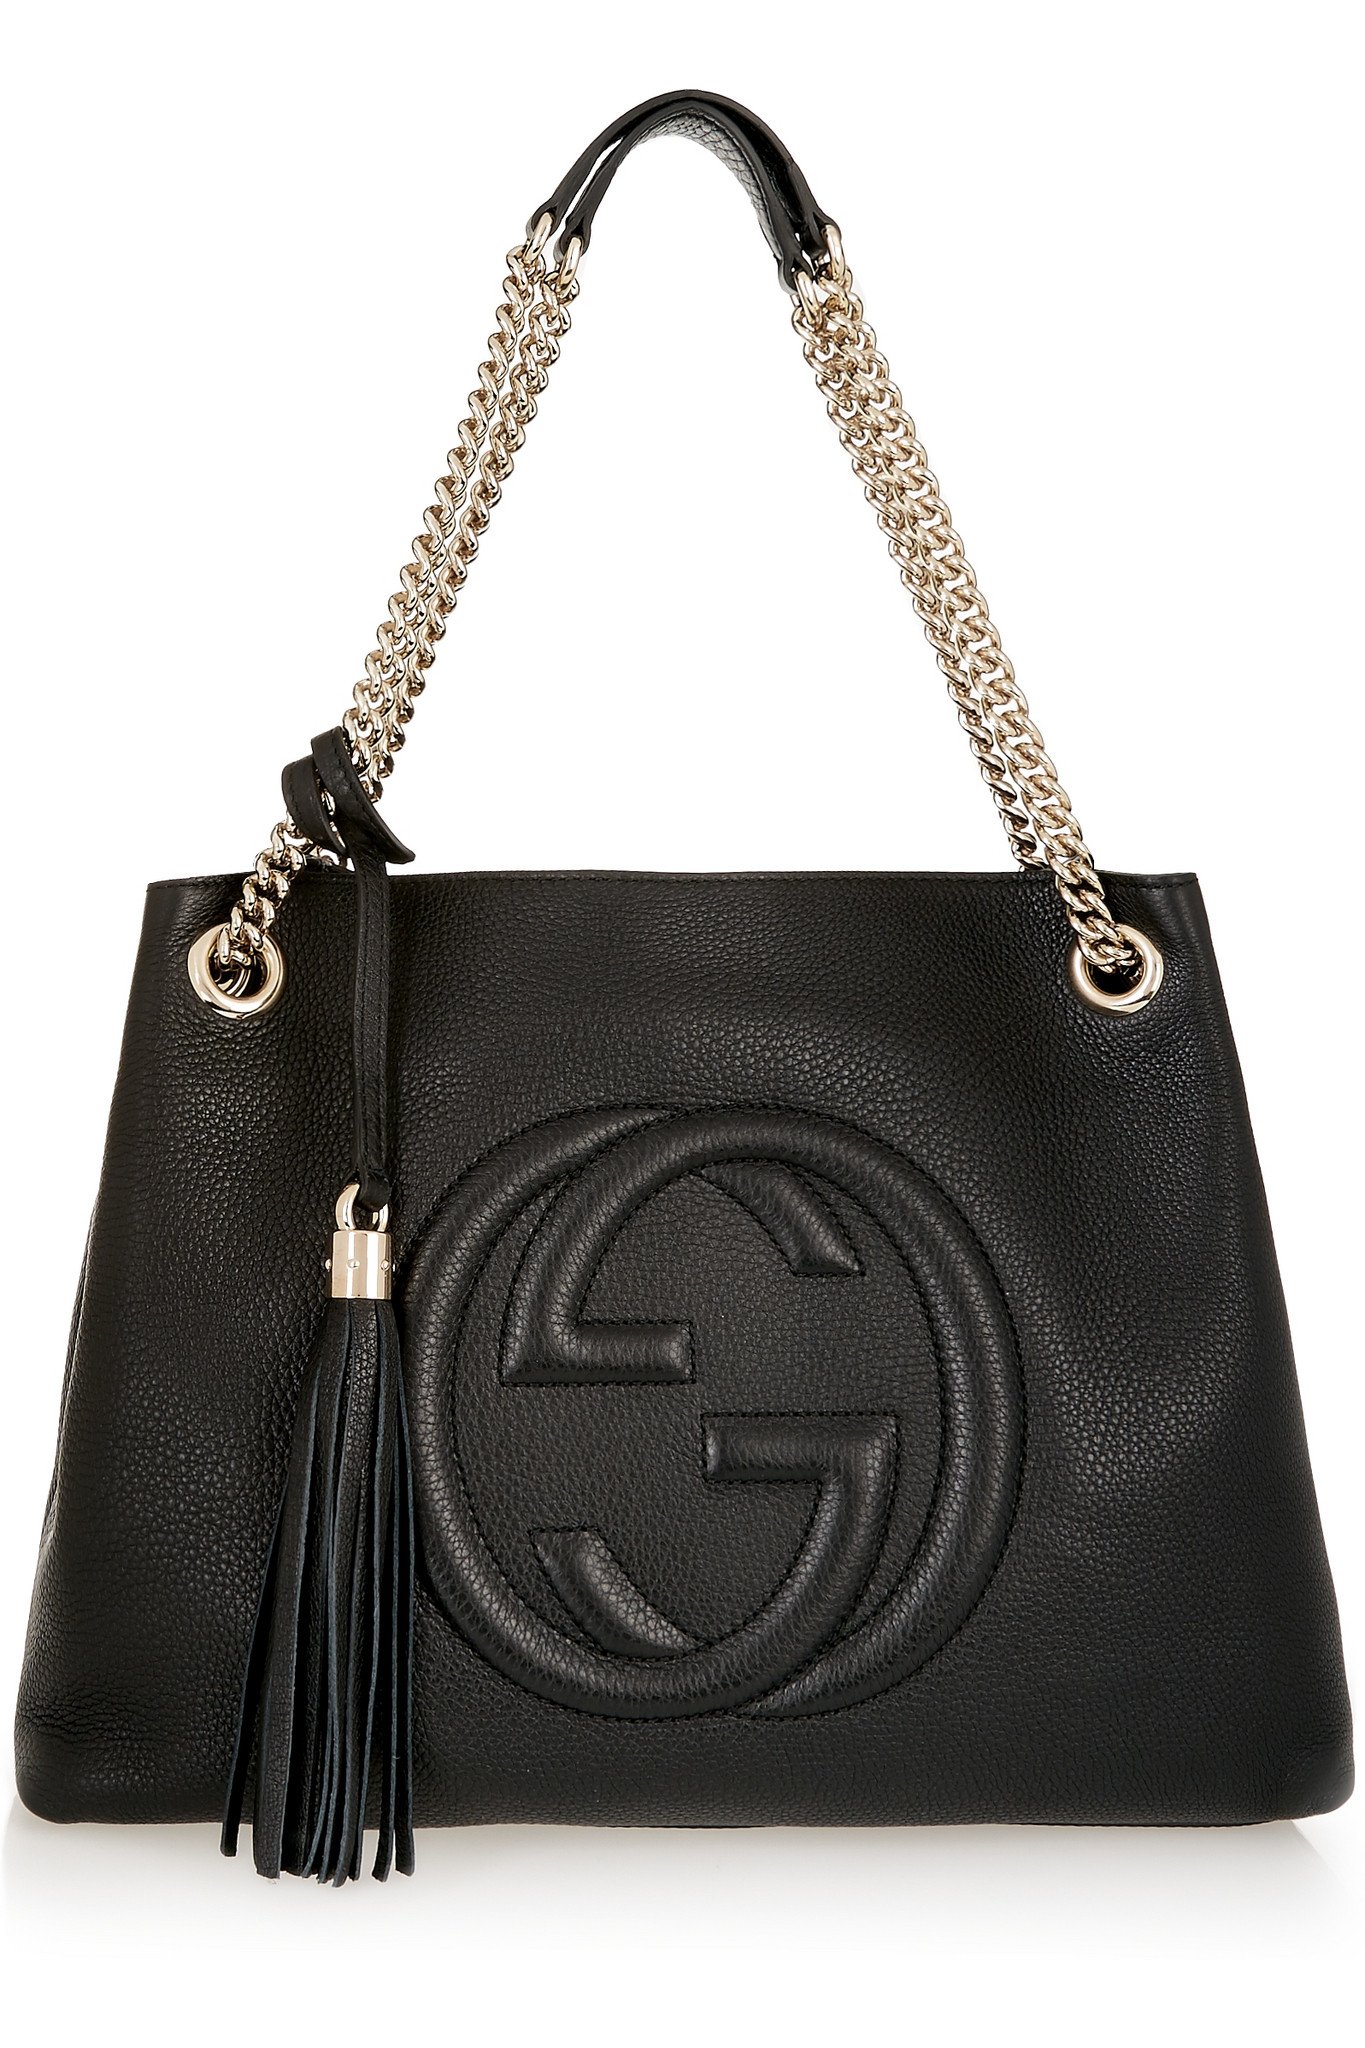 Gucci Soho Medium Textured-leather Shoulder Bag in Black | Lyst